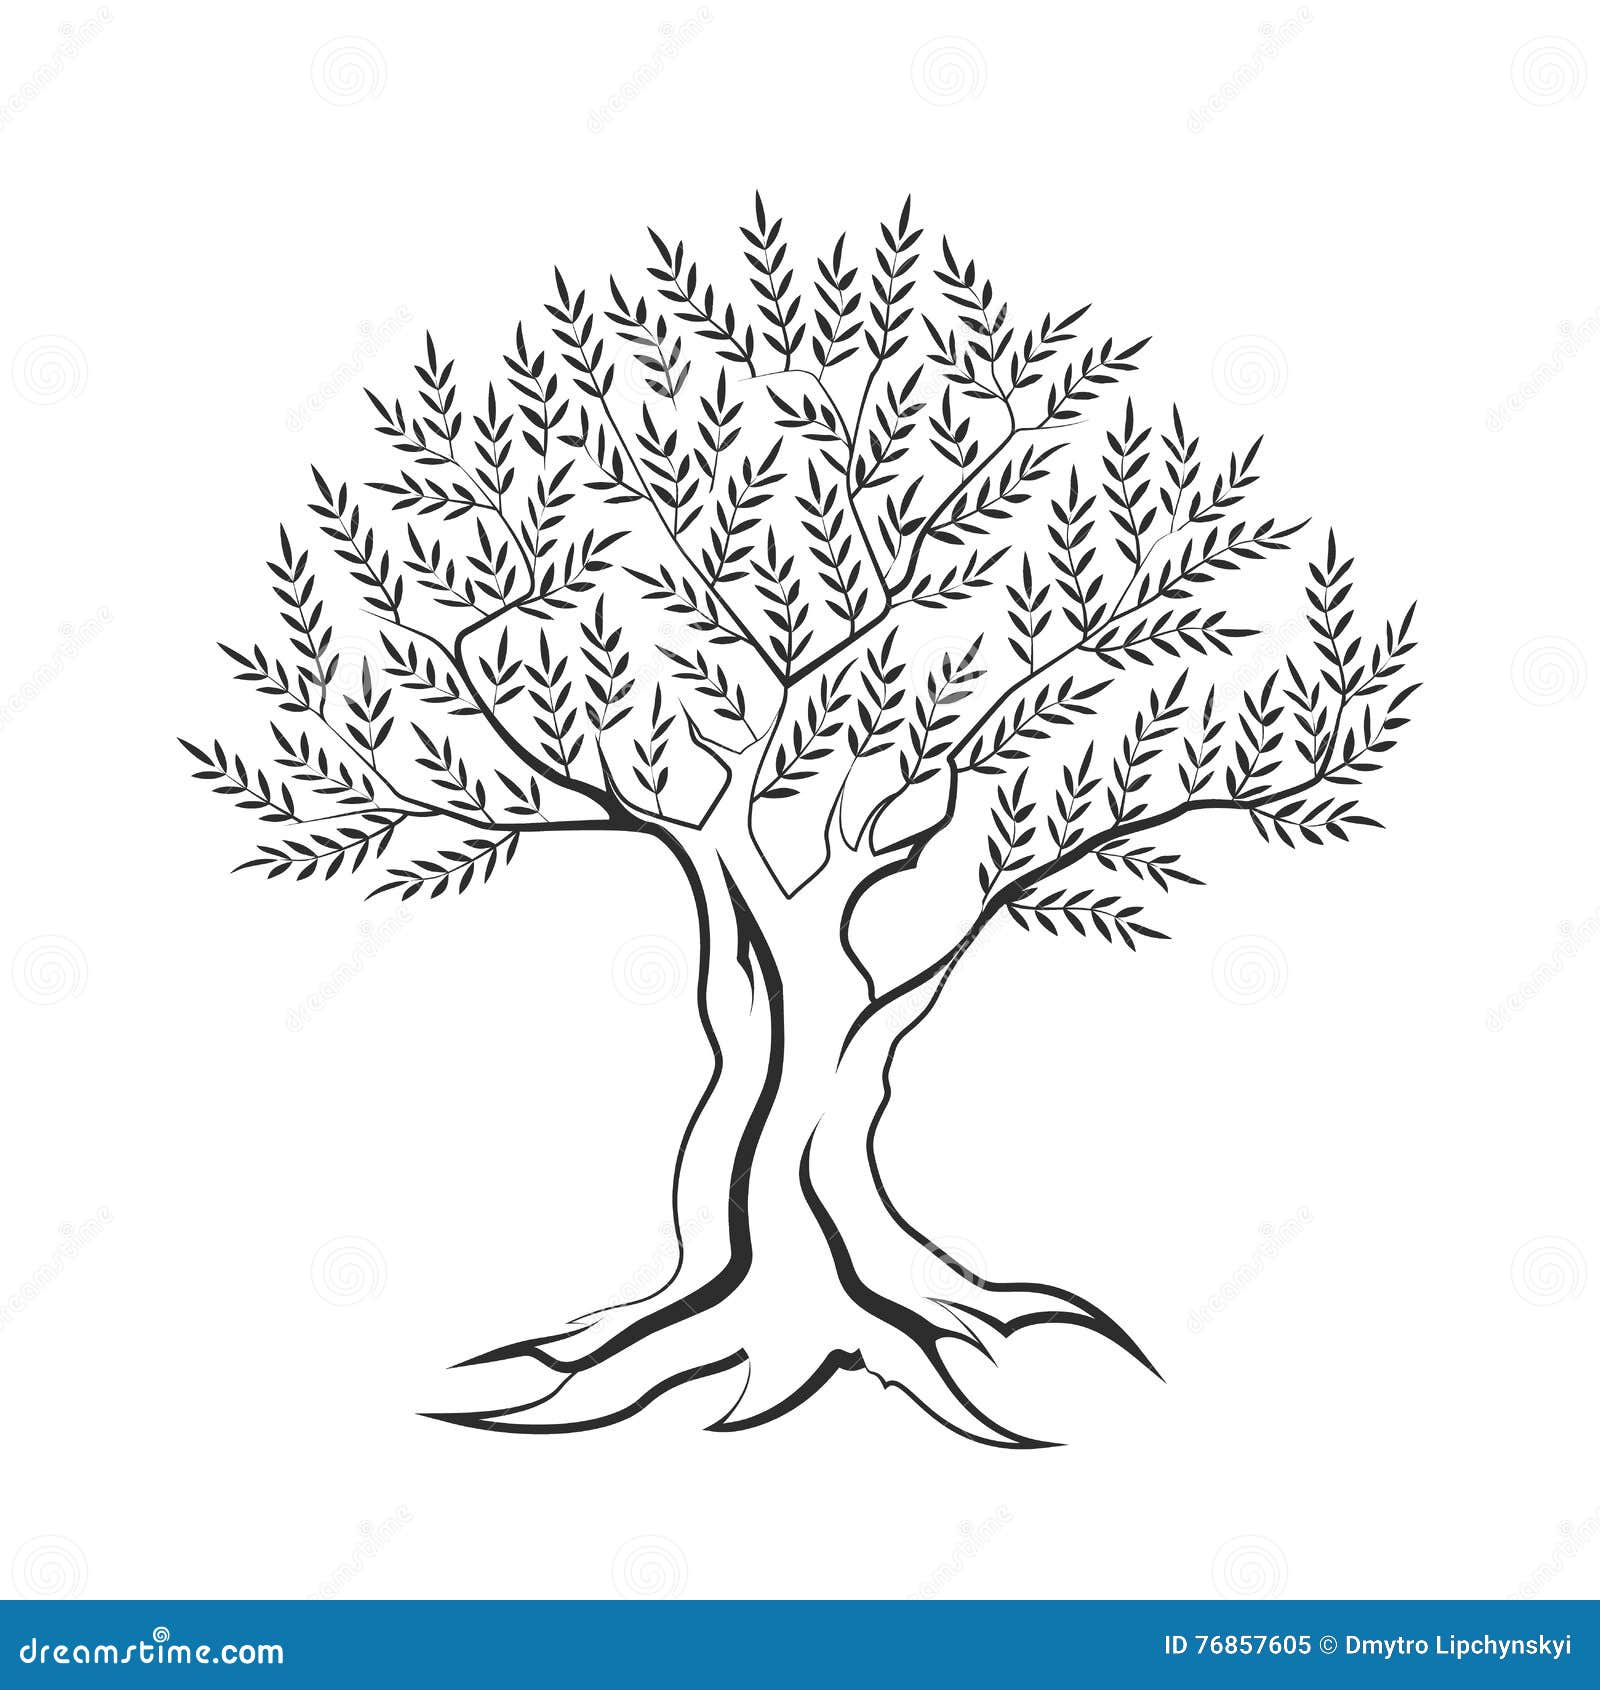 Tree Drawing PNG Images, Transparent Tree Drawing Image Download - PNGitem